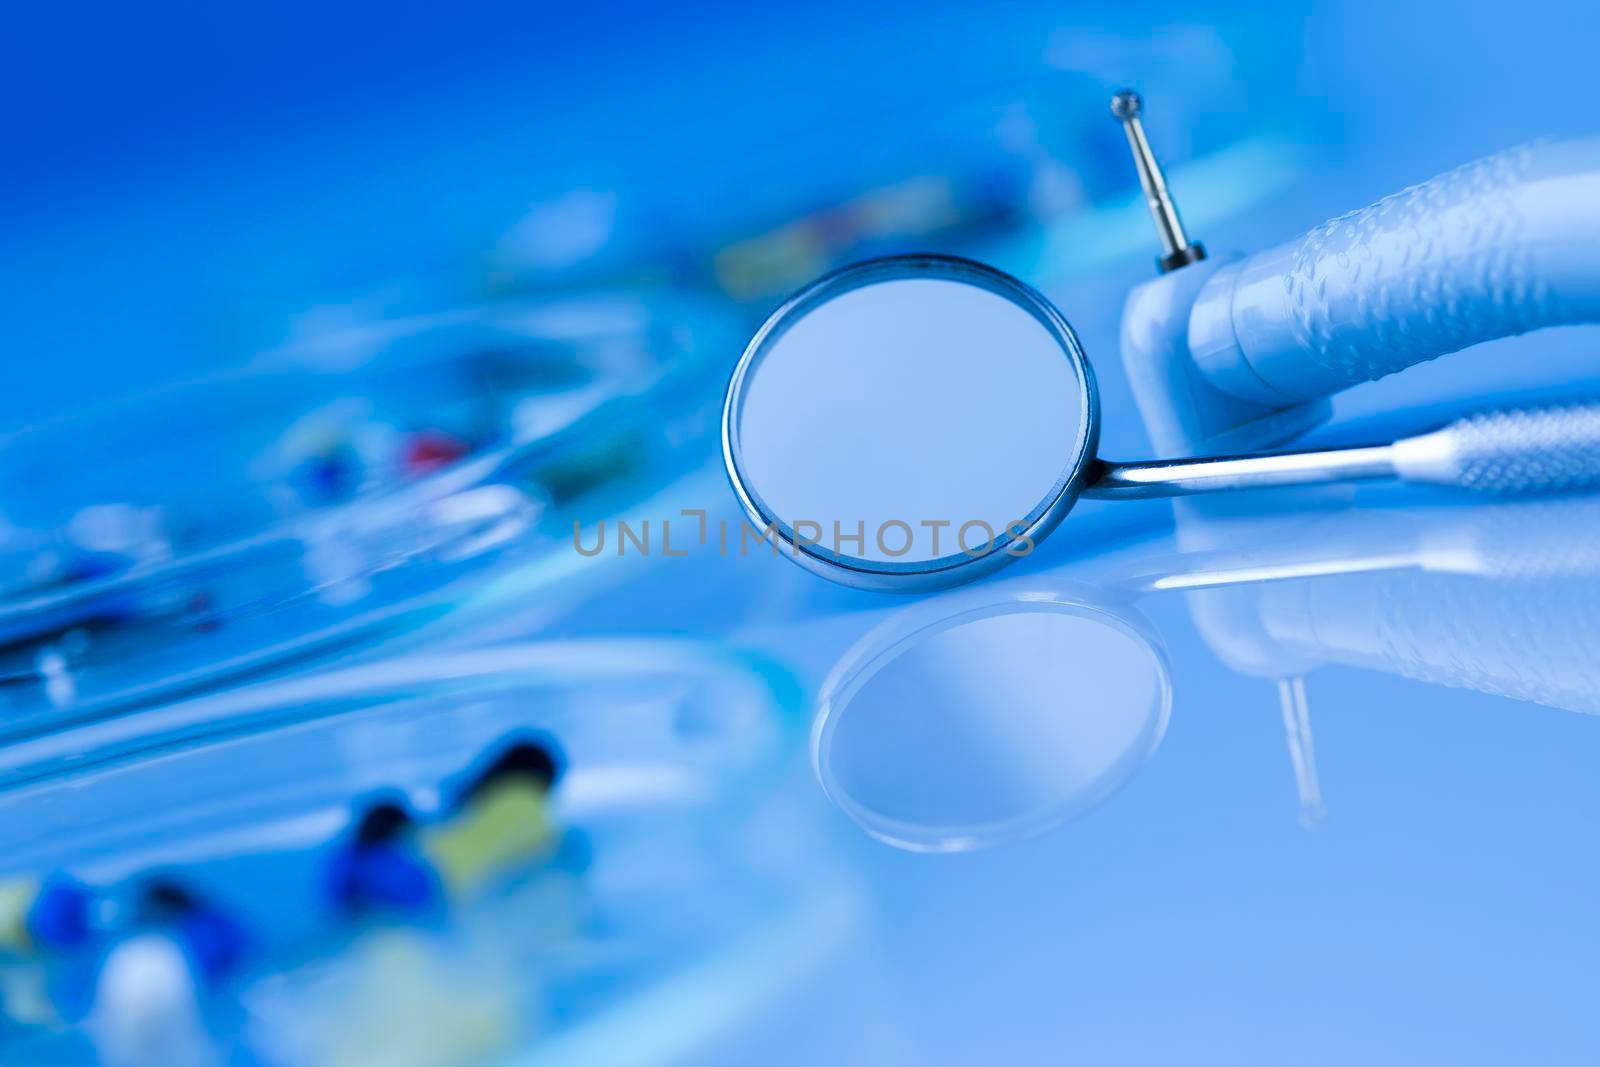 Stomatology equipment for dental care by JanPietruszka